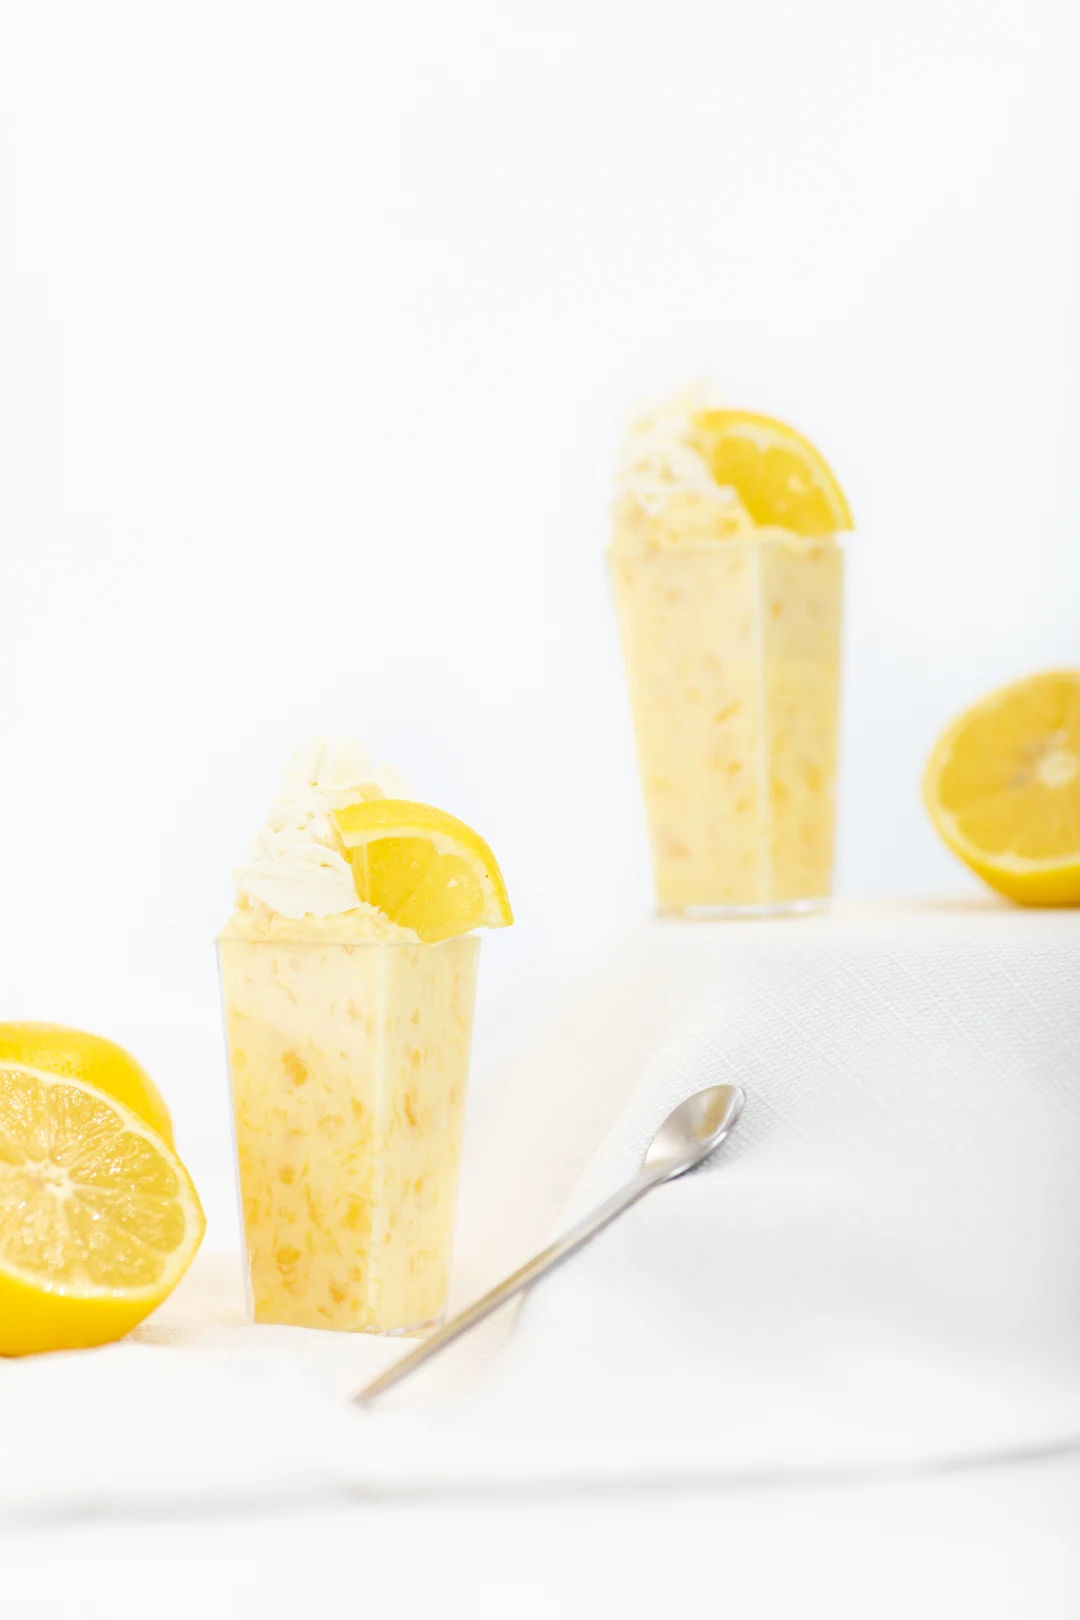 Pretty Pineapple Lemon Parfaits topped with lemon wedges.